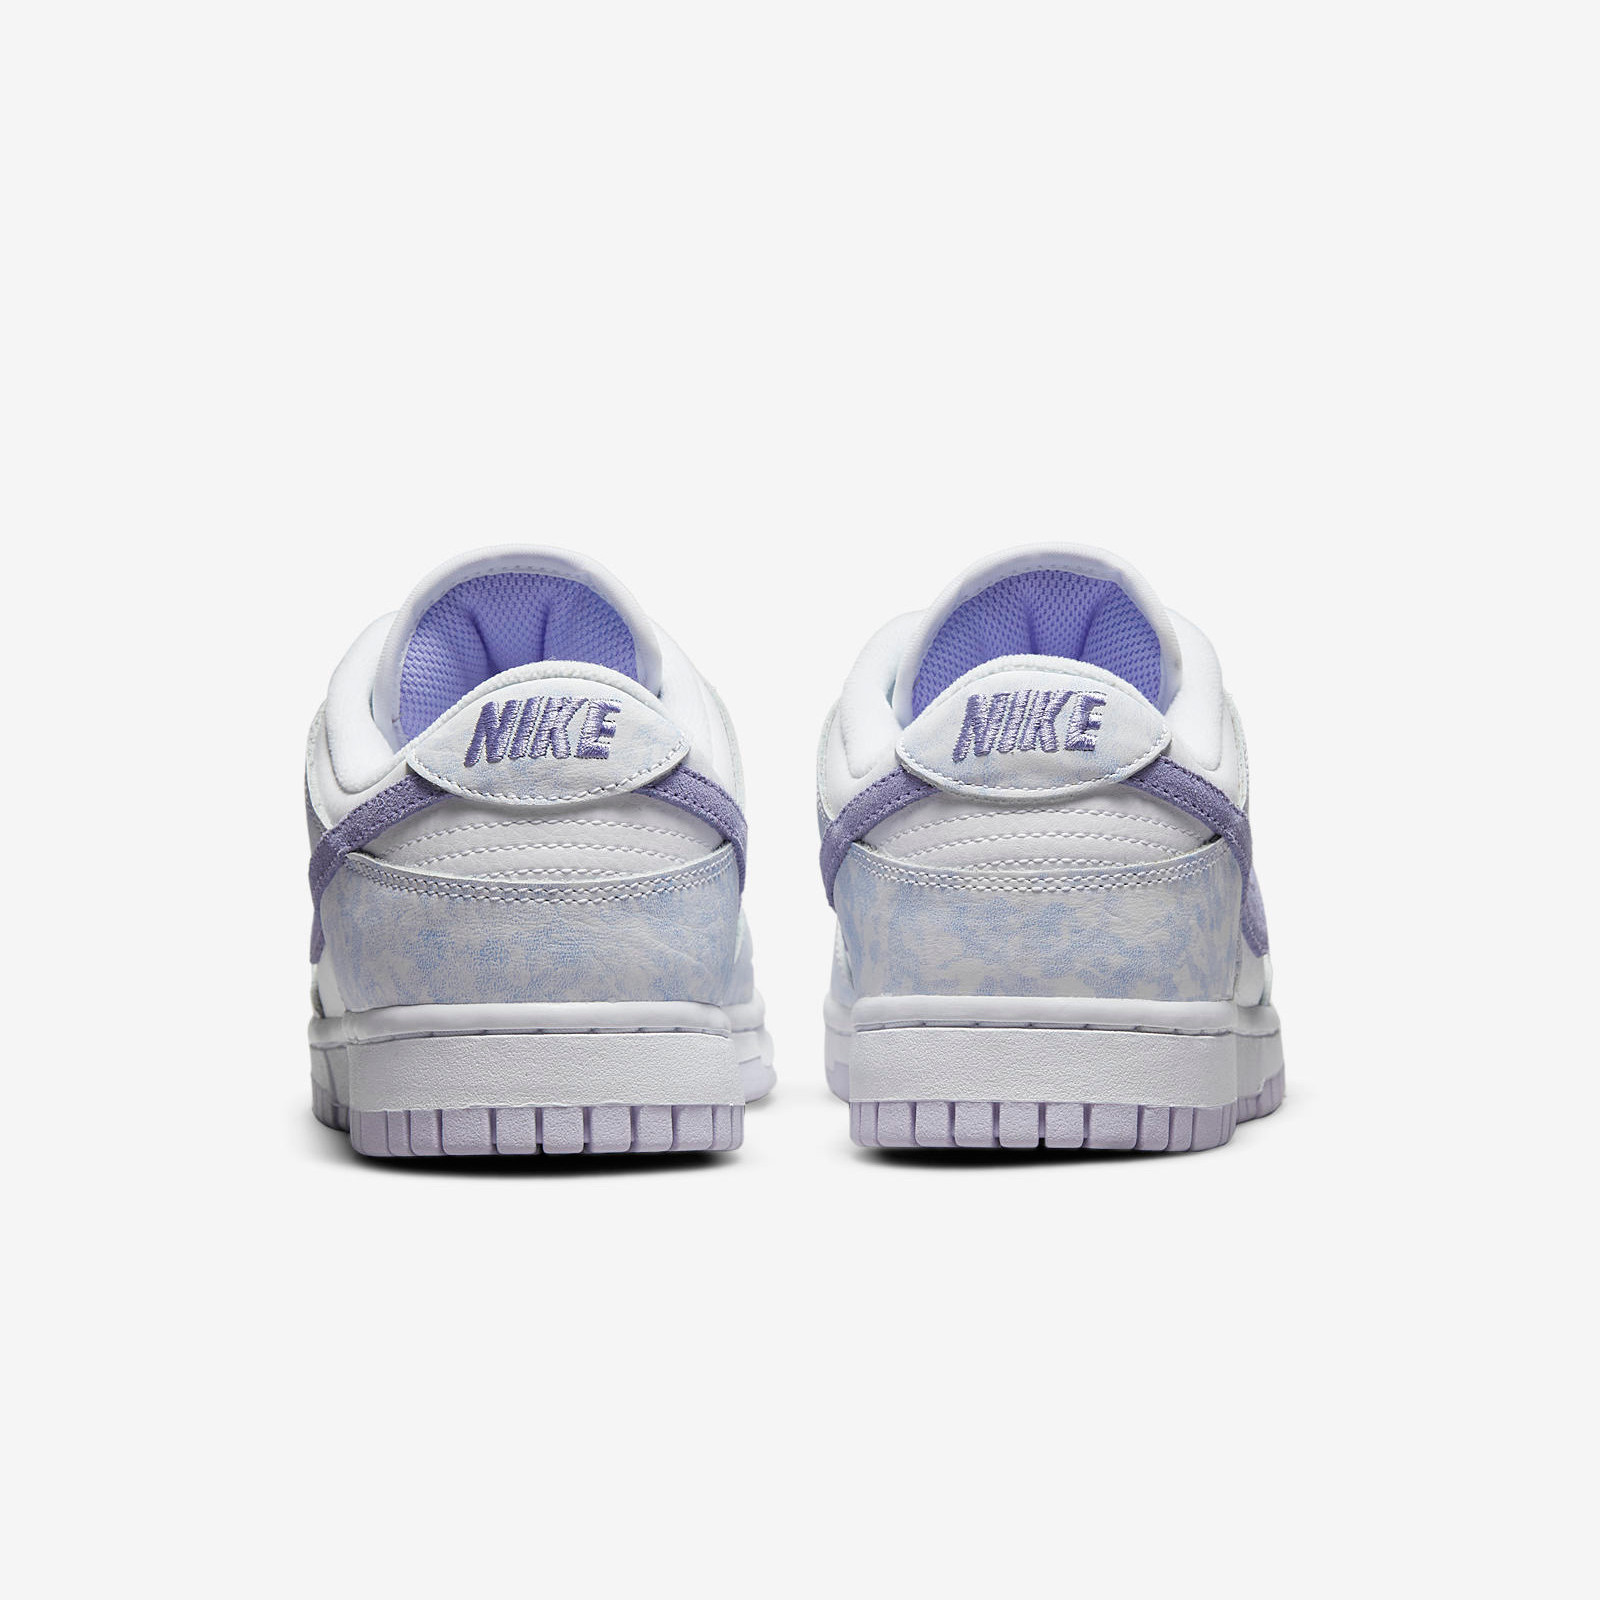 Nike Dunk Low OG
Purple Pulse